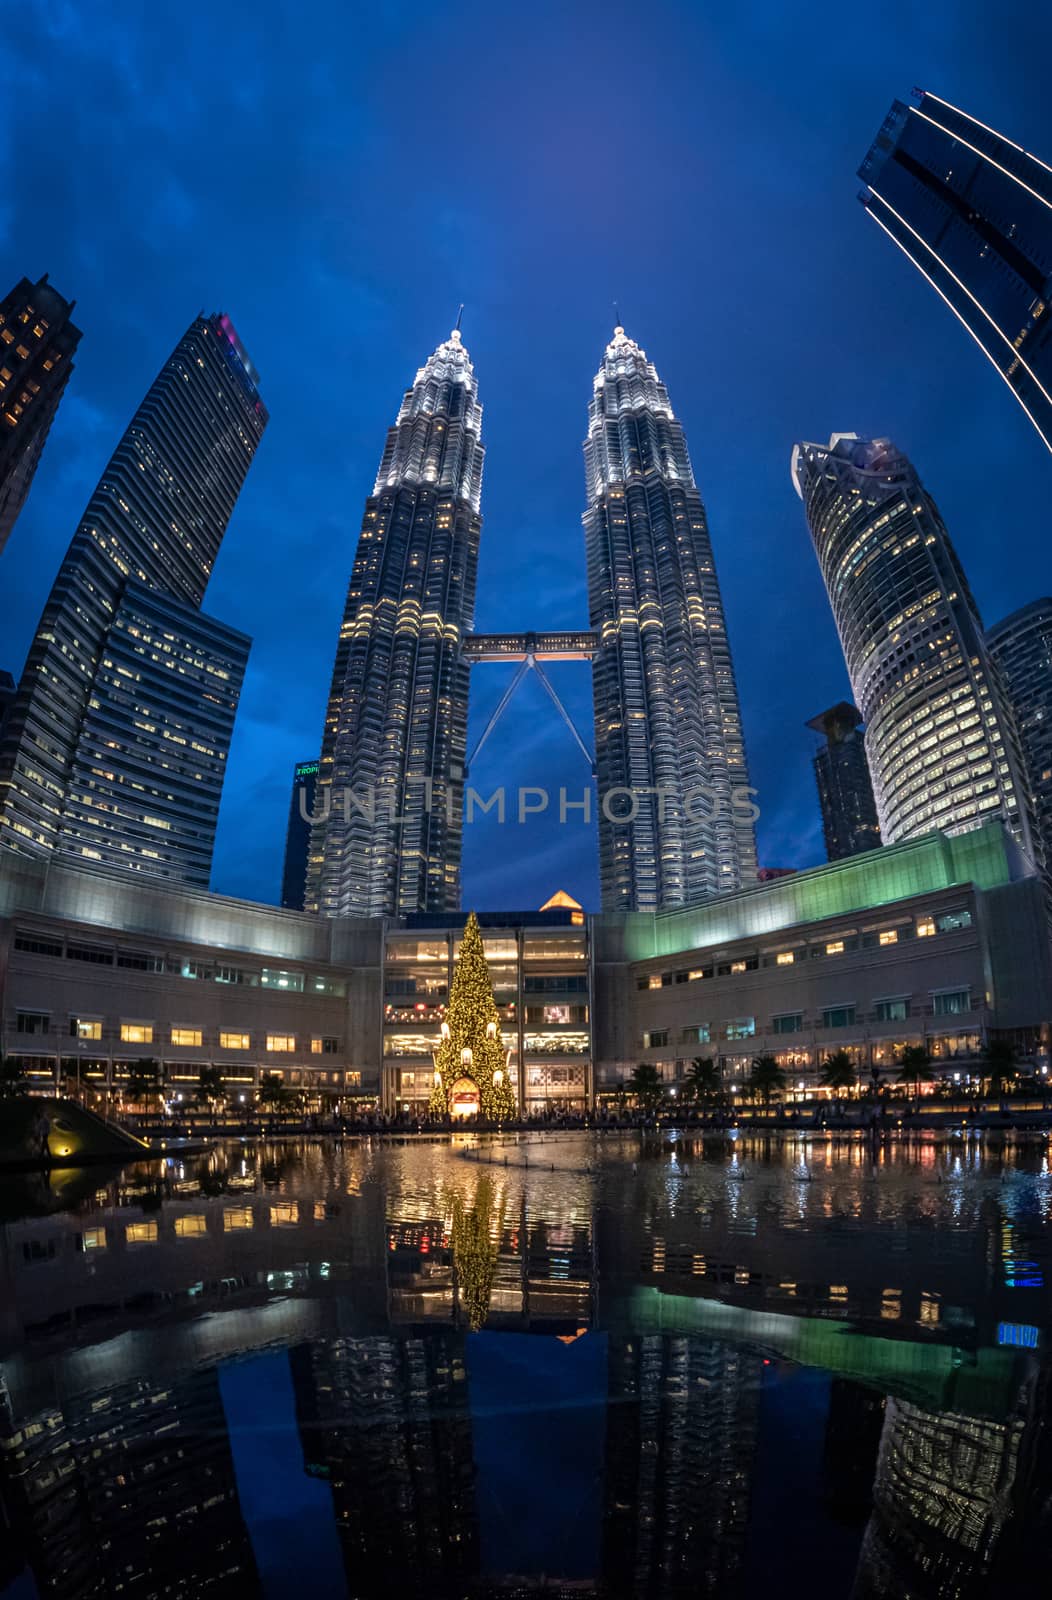 Petronas twin towers panorama with illuminated christmas decoration in Kuala Lumpur